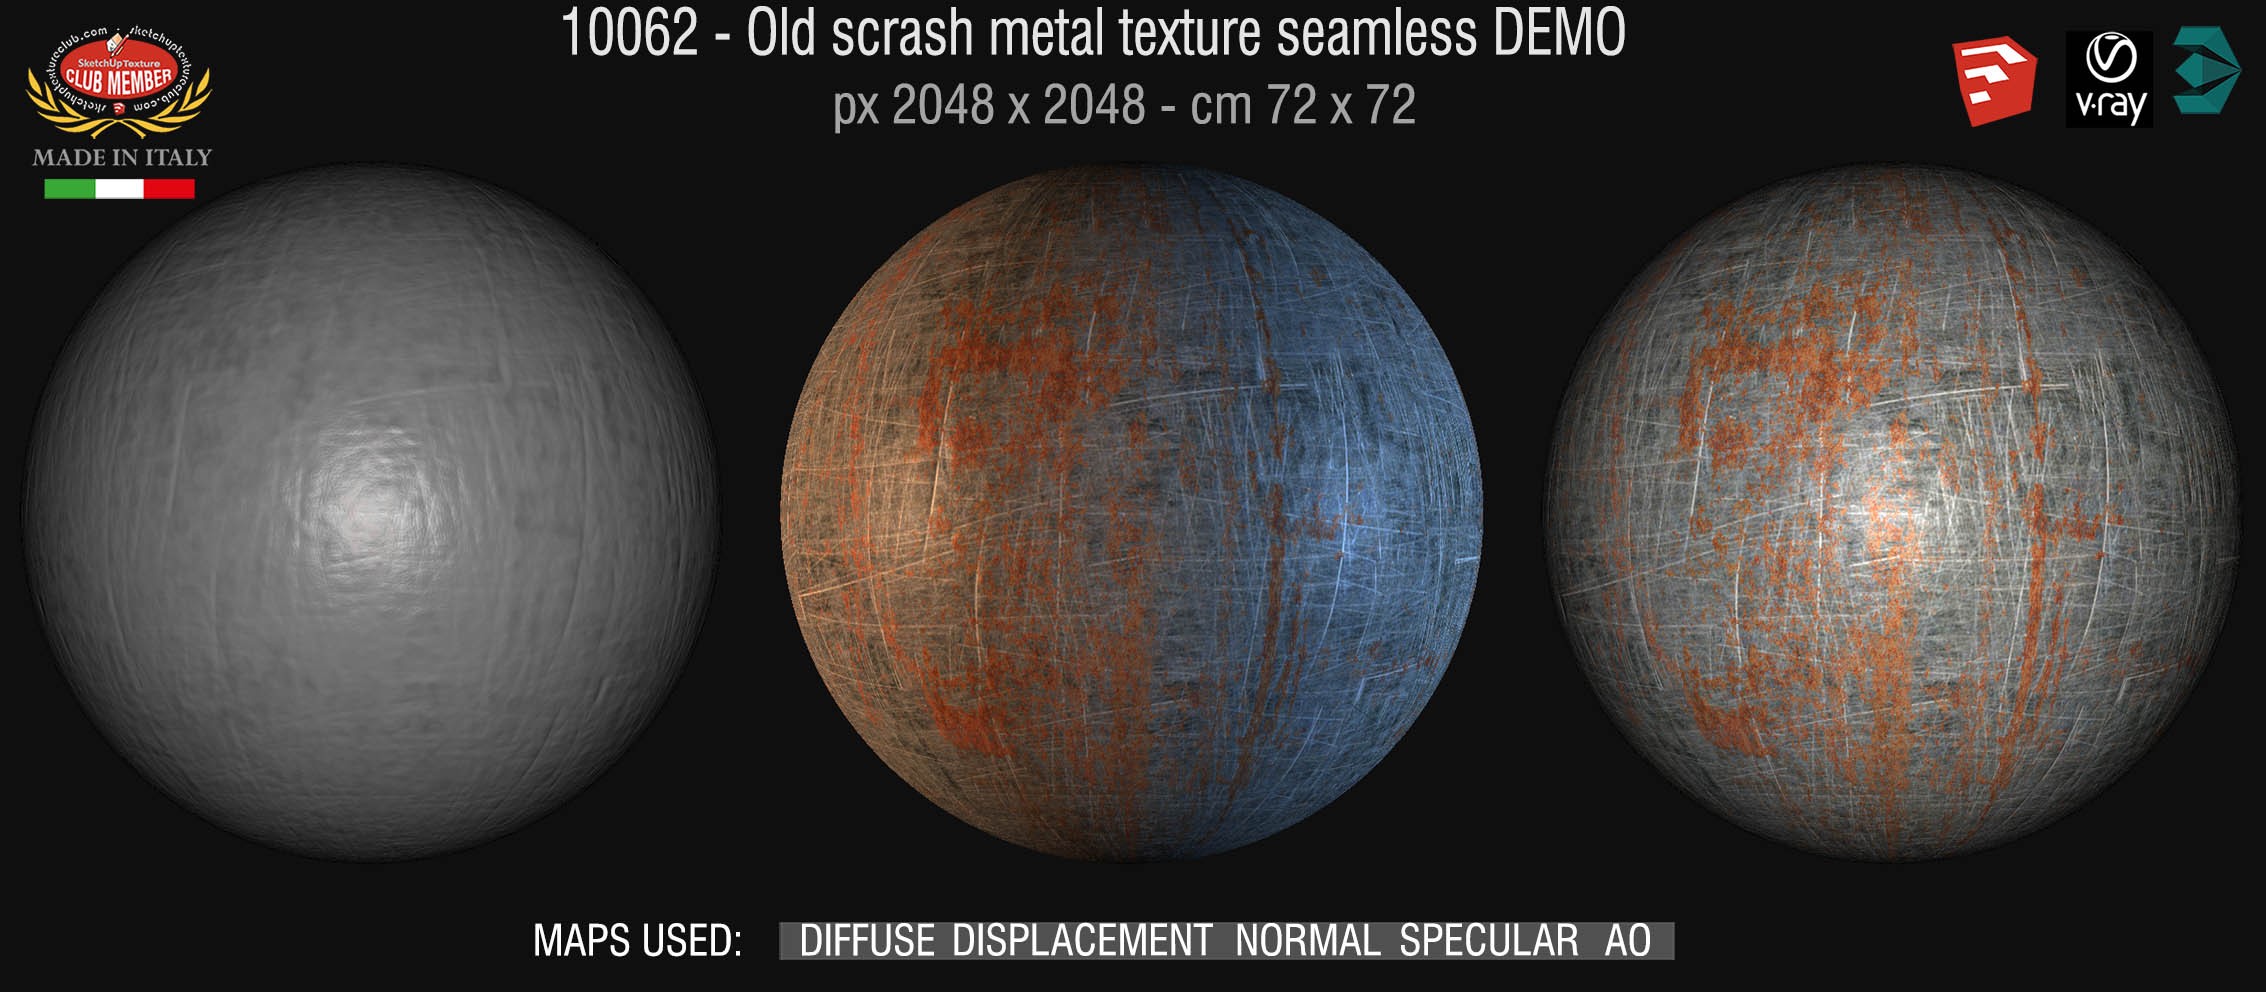 10062 HR Old scrash metal texture seamless + maps DEMO